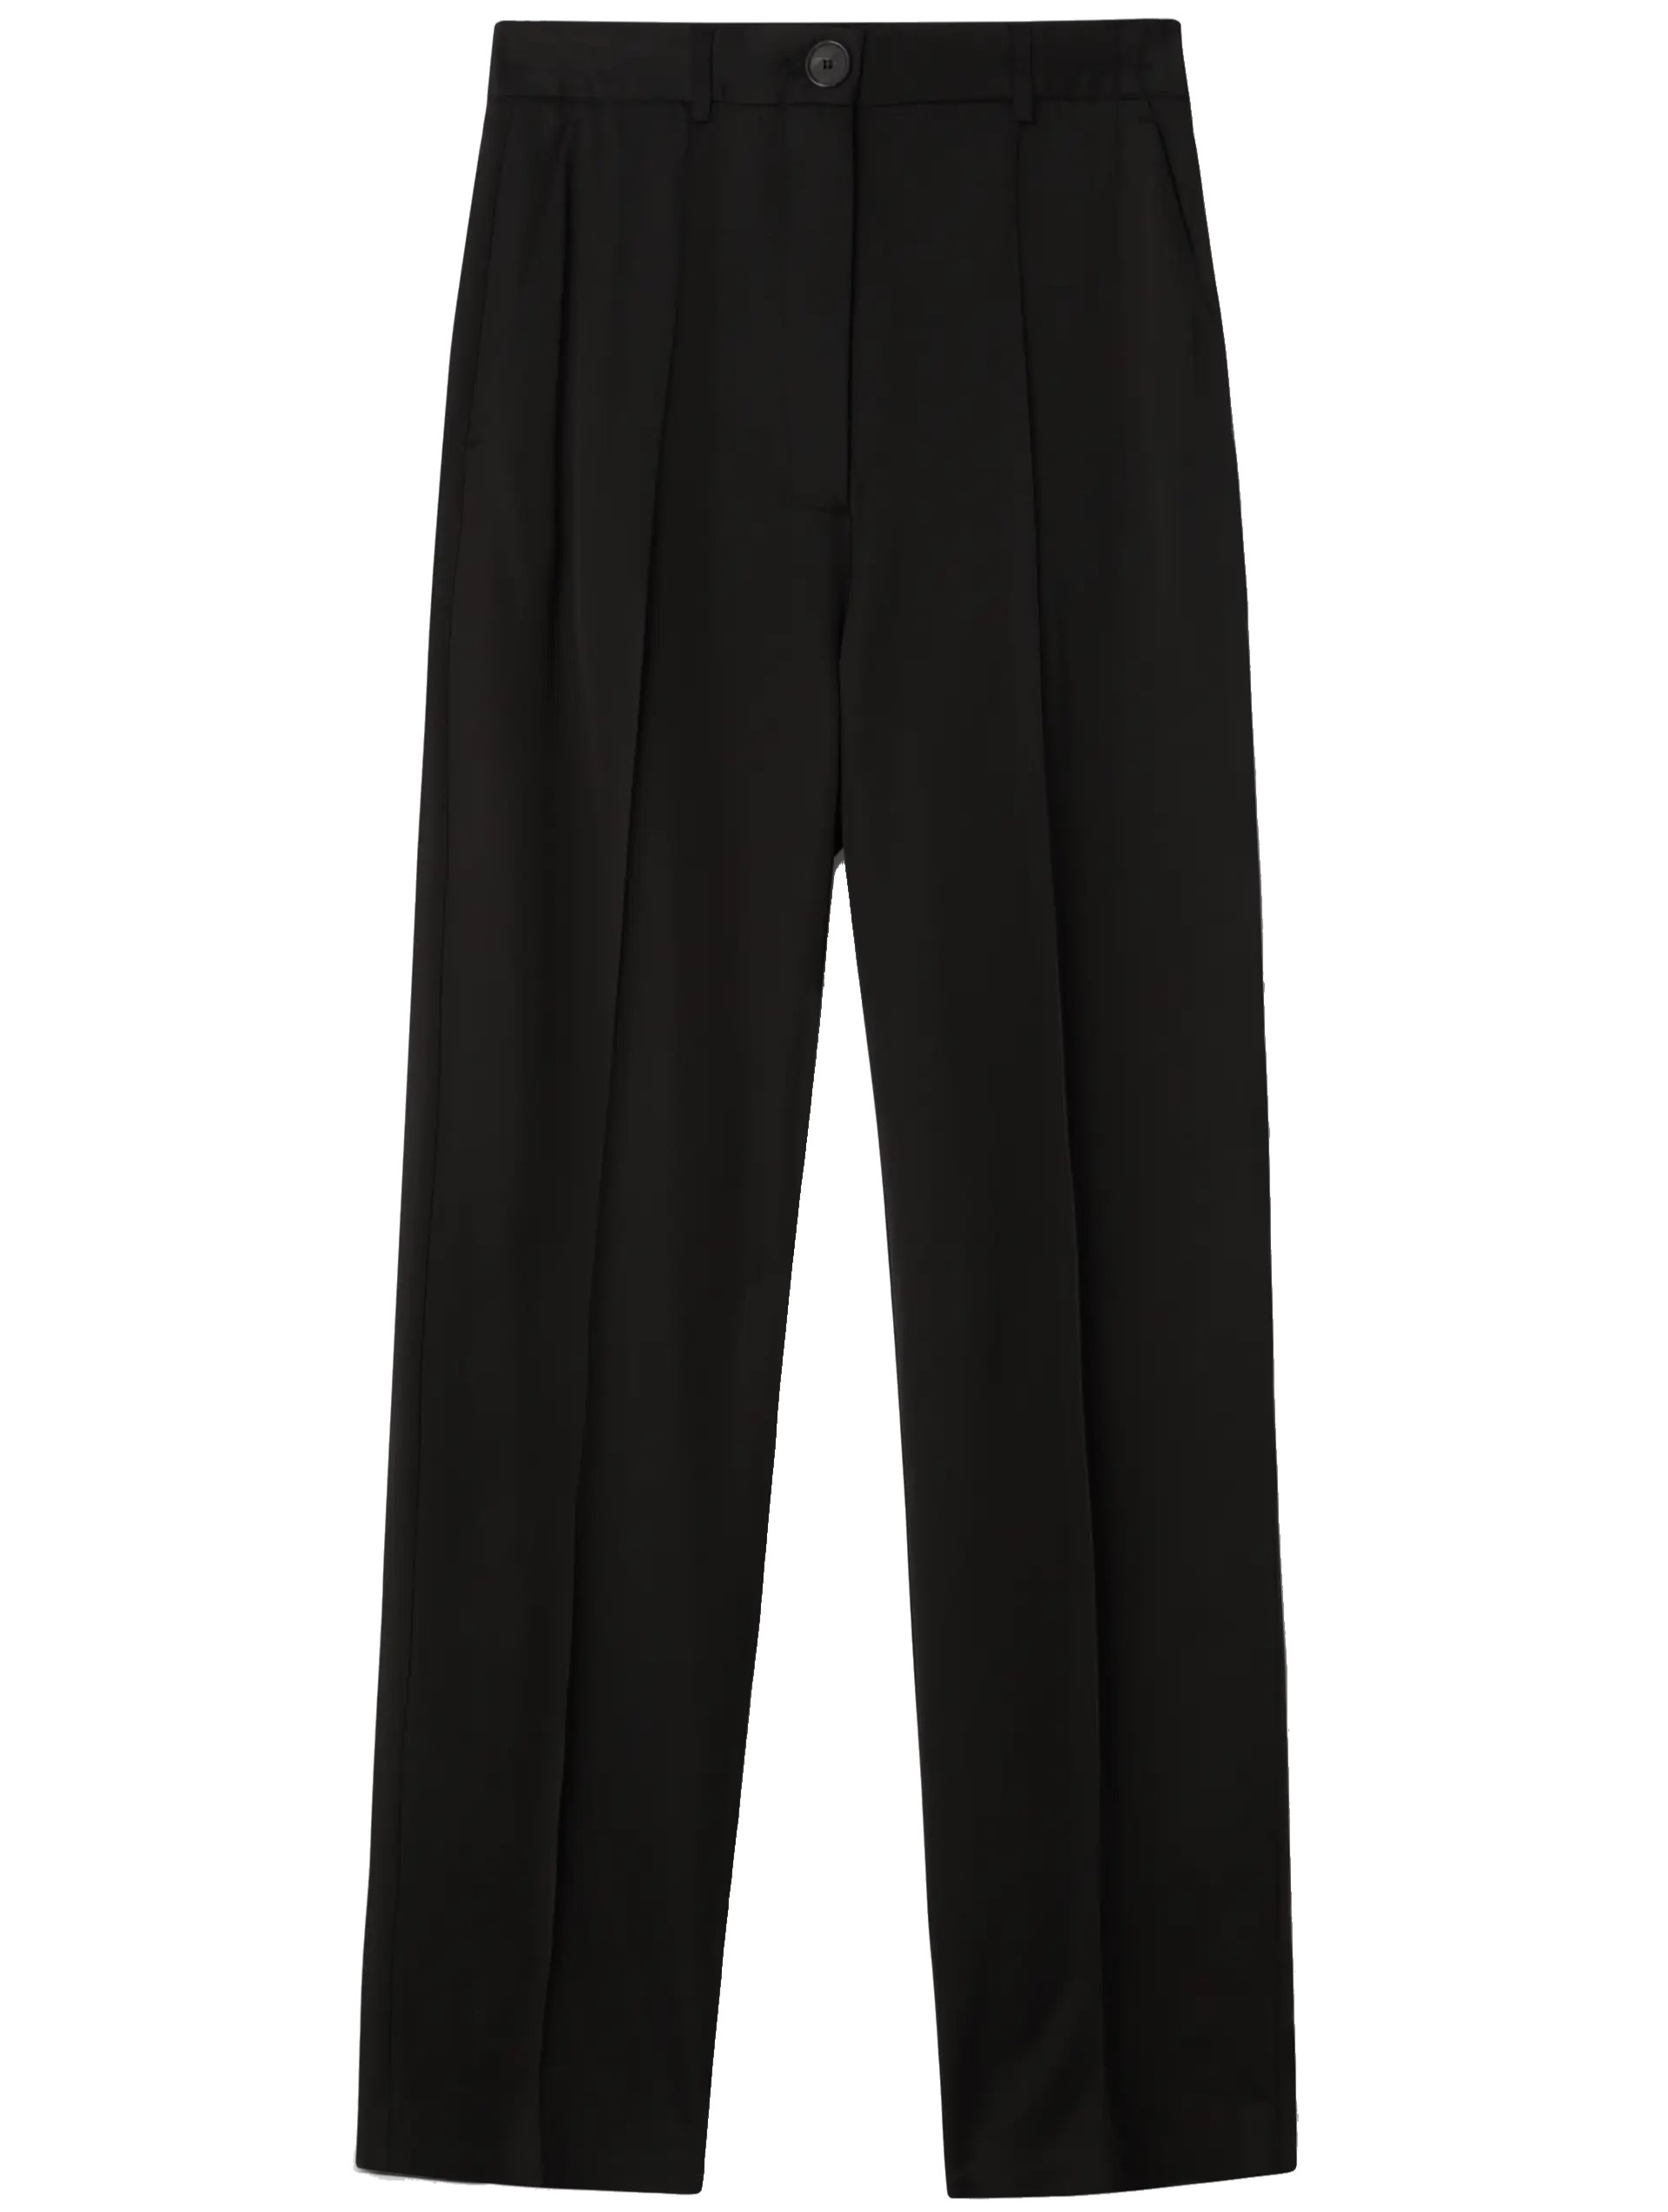 DAGMAR Slim Suit Pant in Shiny Black